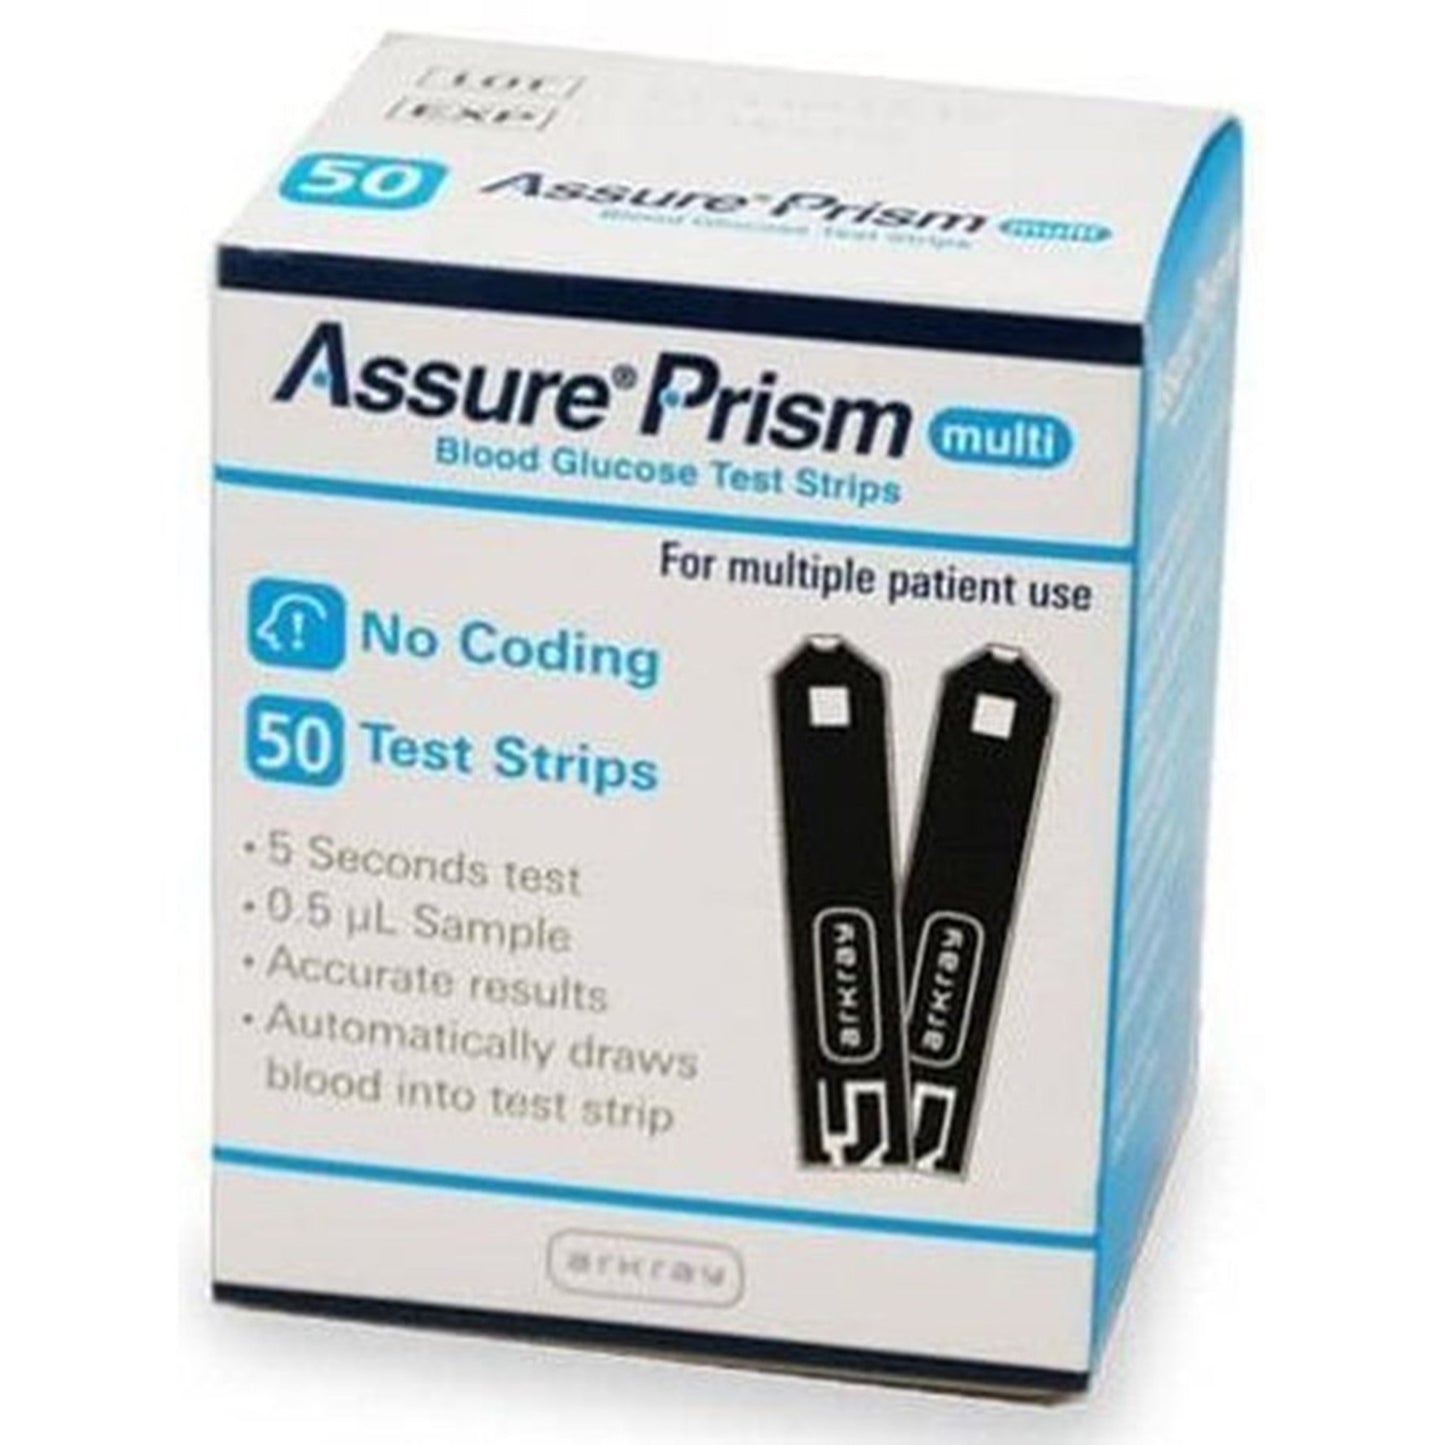 Assure Prism Multi Blood Glucose Test Strips, 50 ct